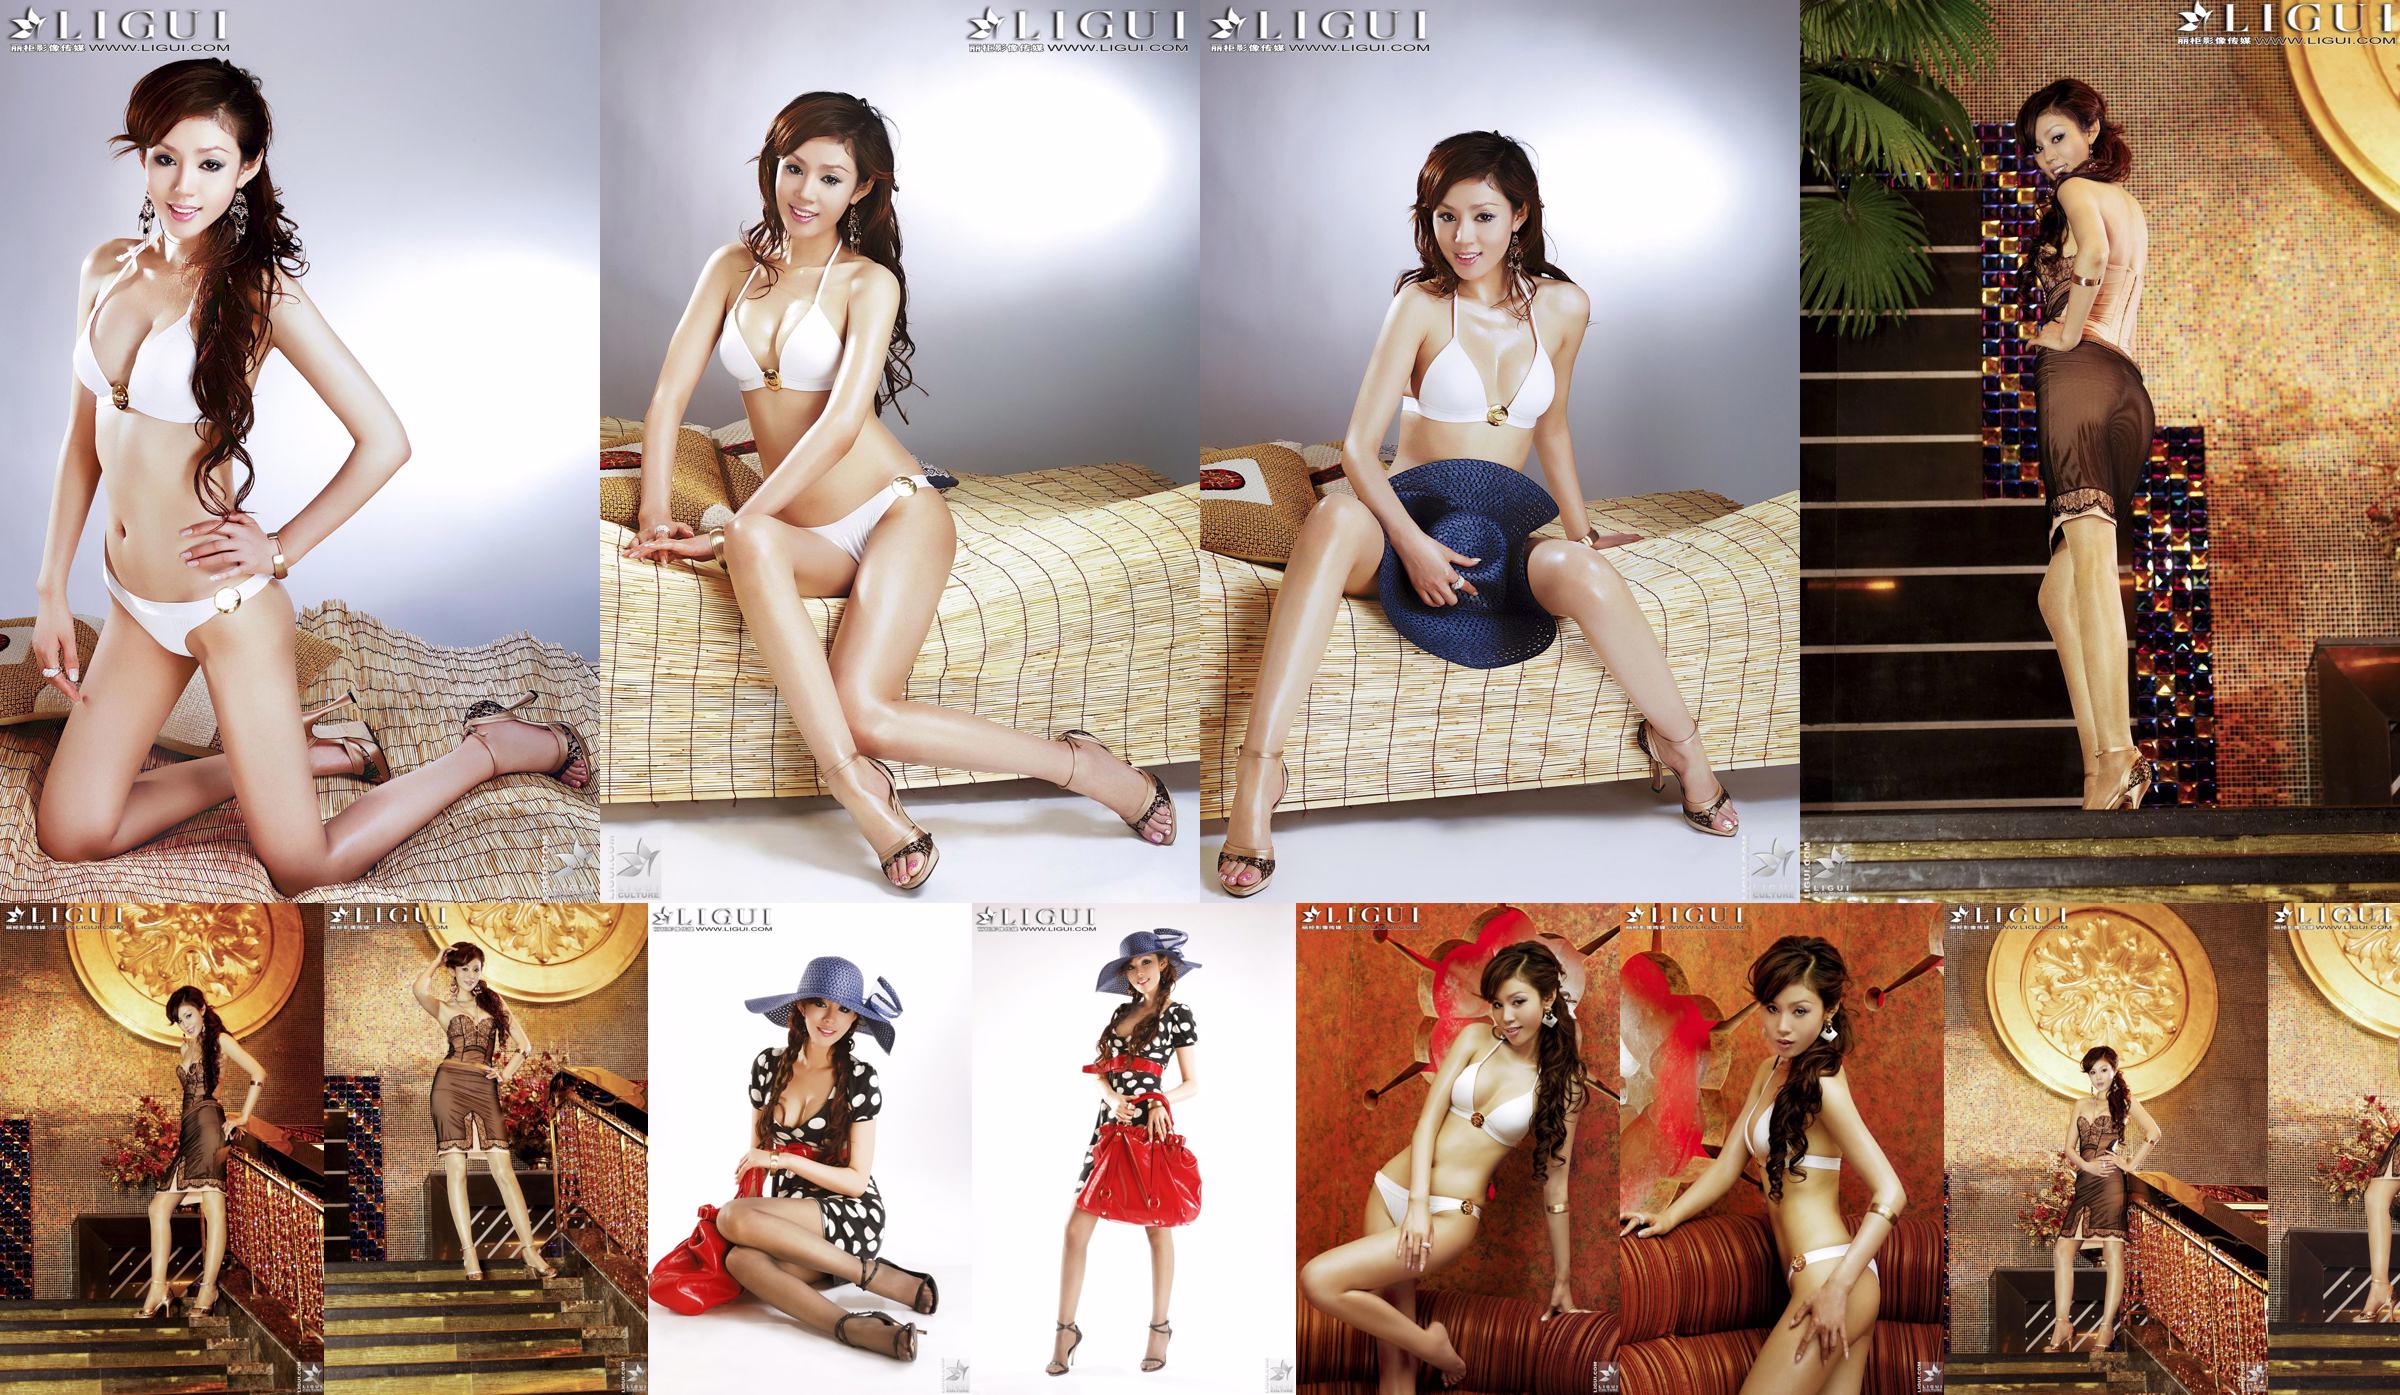 [丽 柜 LiGui] Model Yao Jinjin's "Bikini + Jurk" Mooie benen en zijdeachtige voeten Foto Foto No.b6dd83 Pagina 3